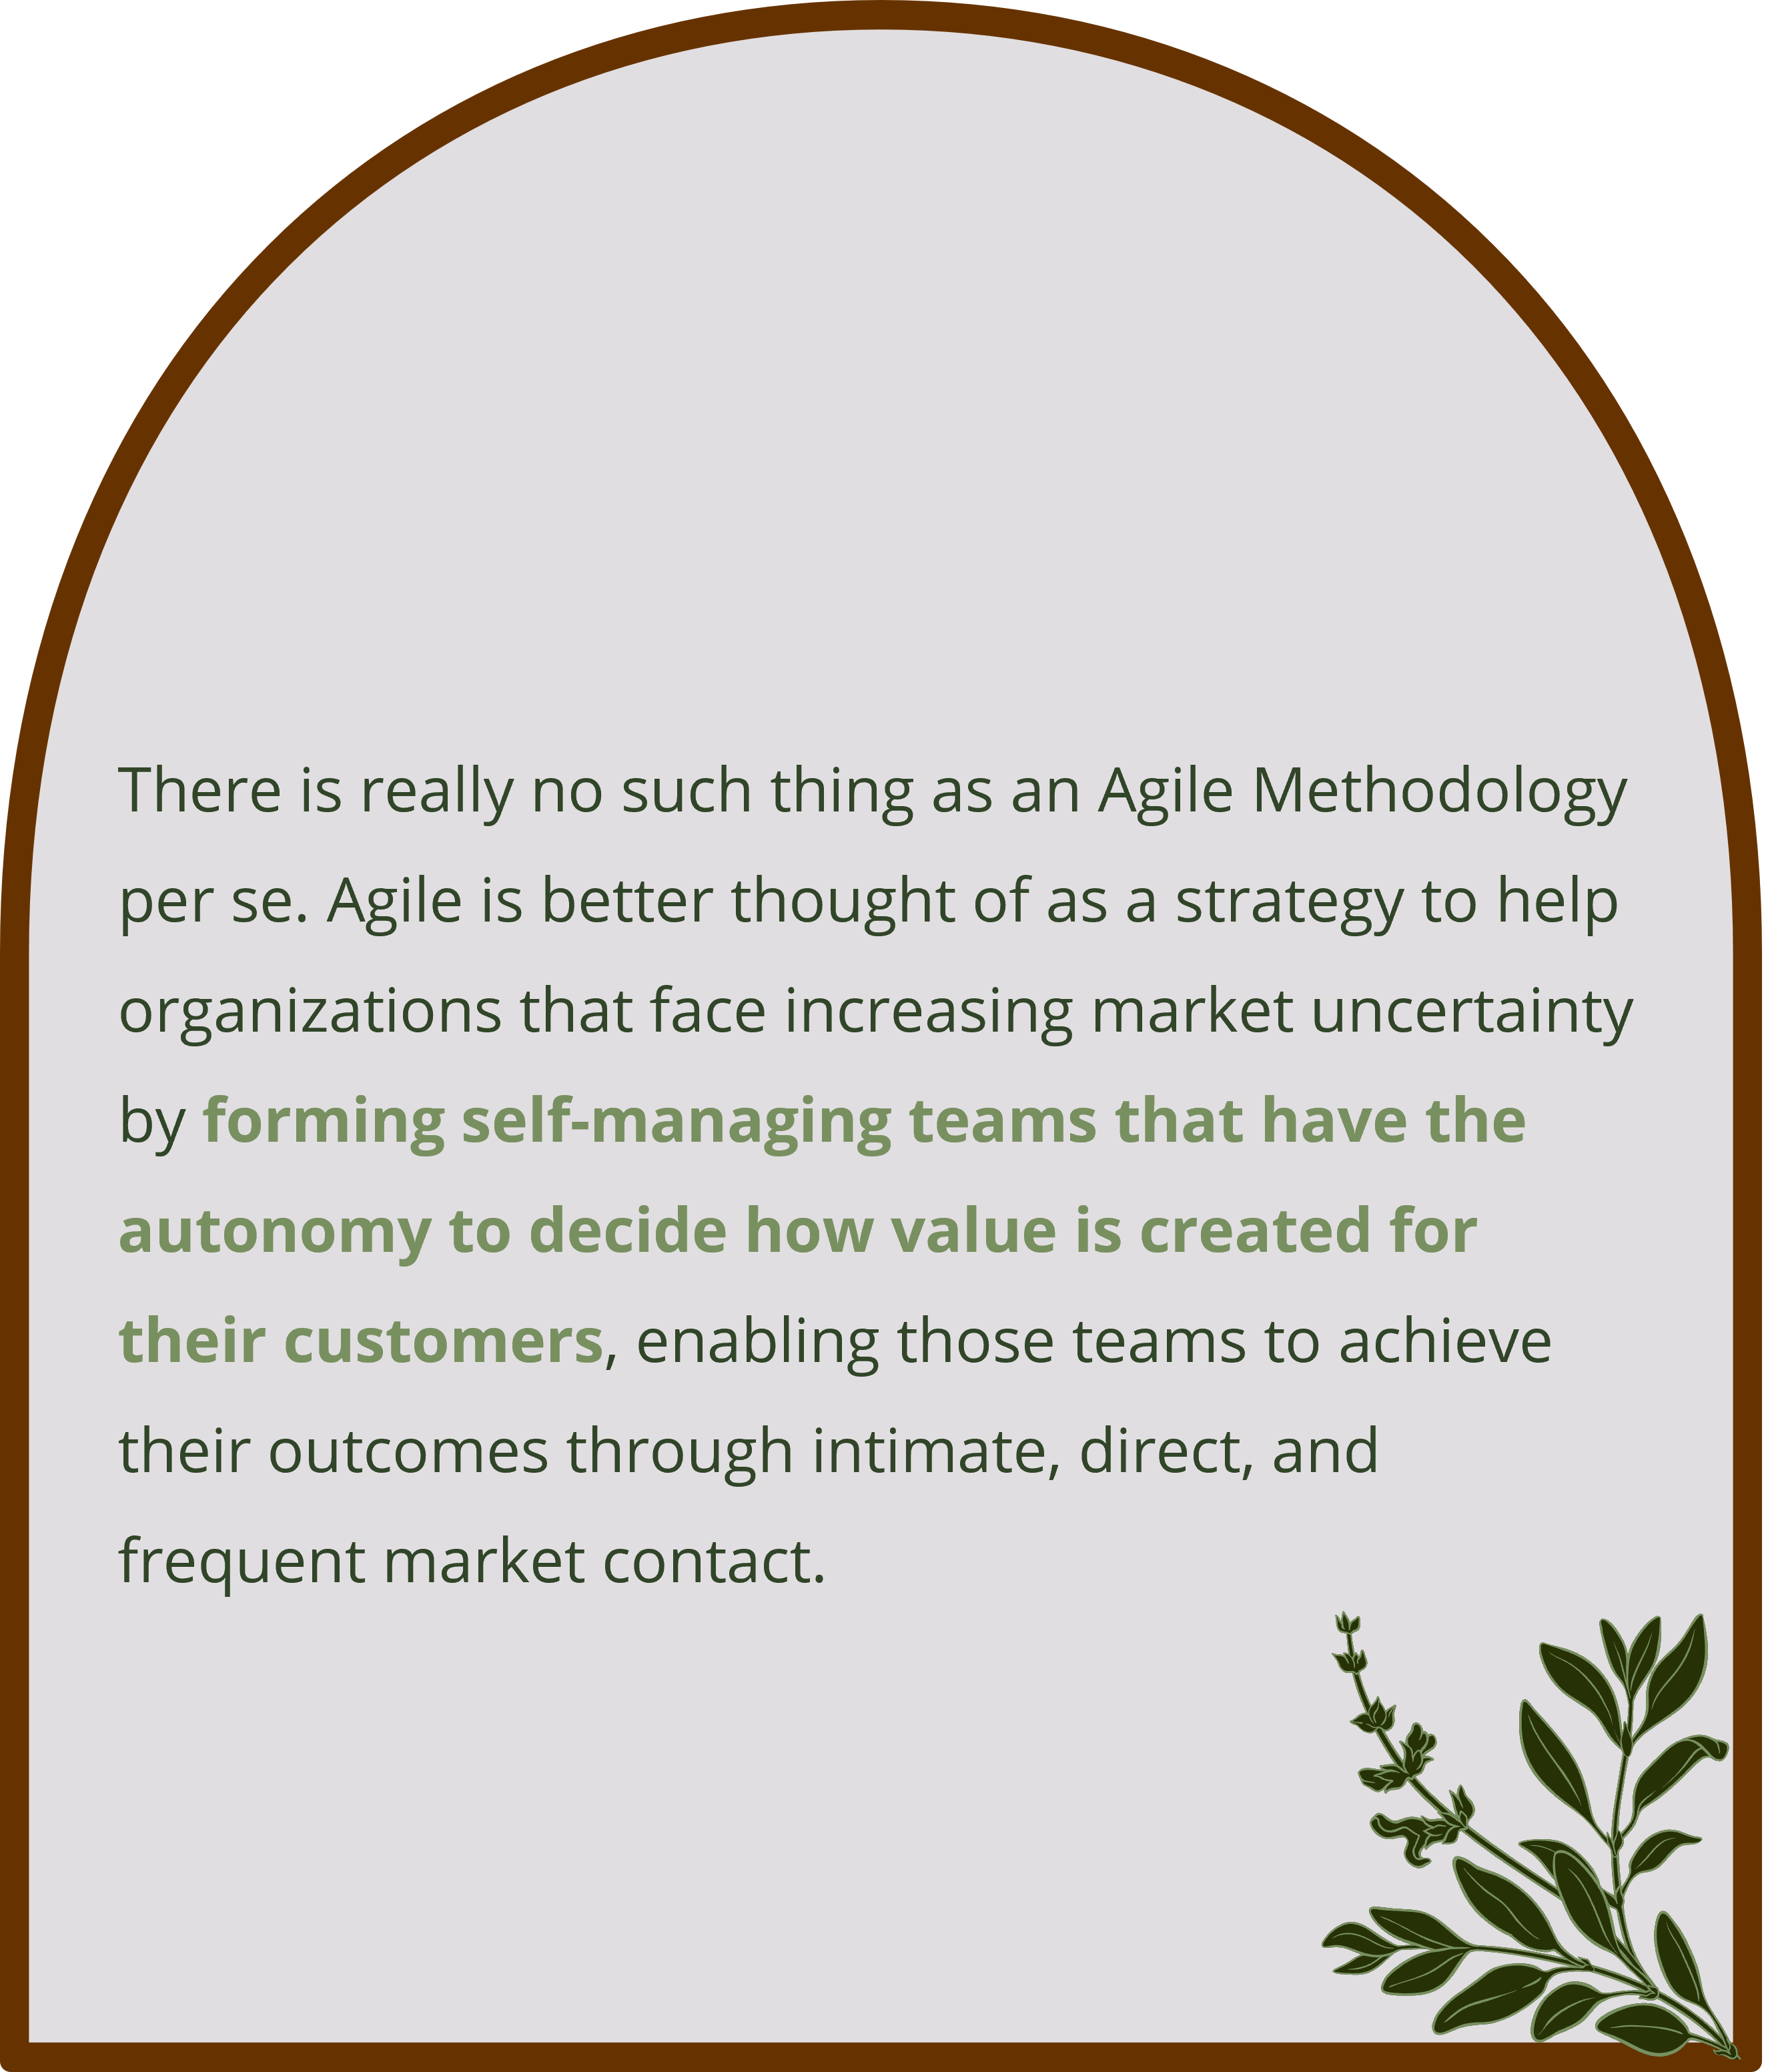 1. What is Agile Methodology?